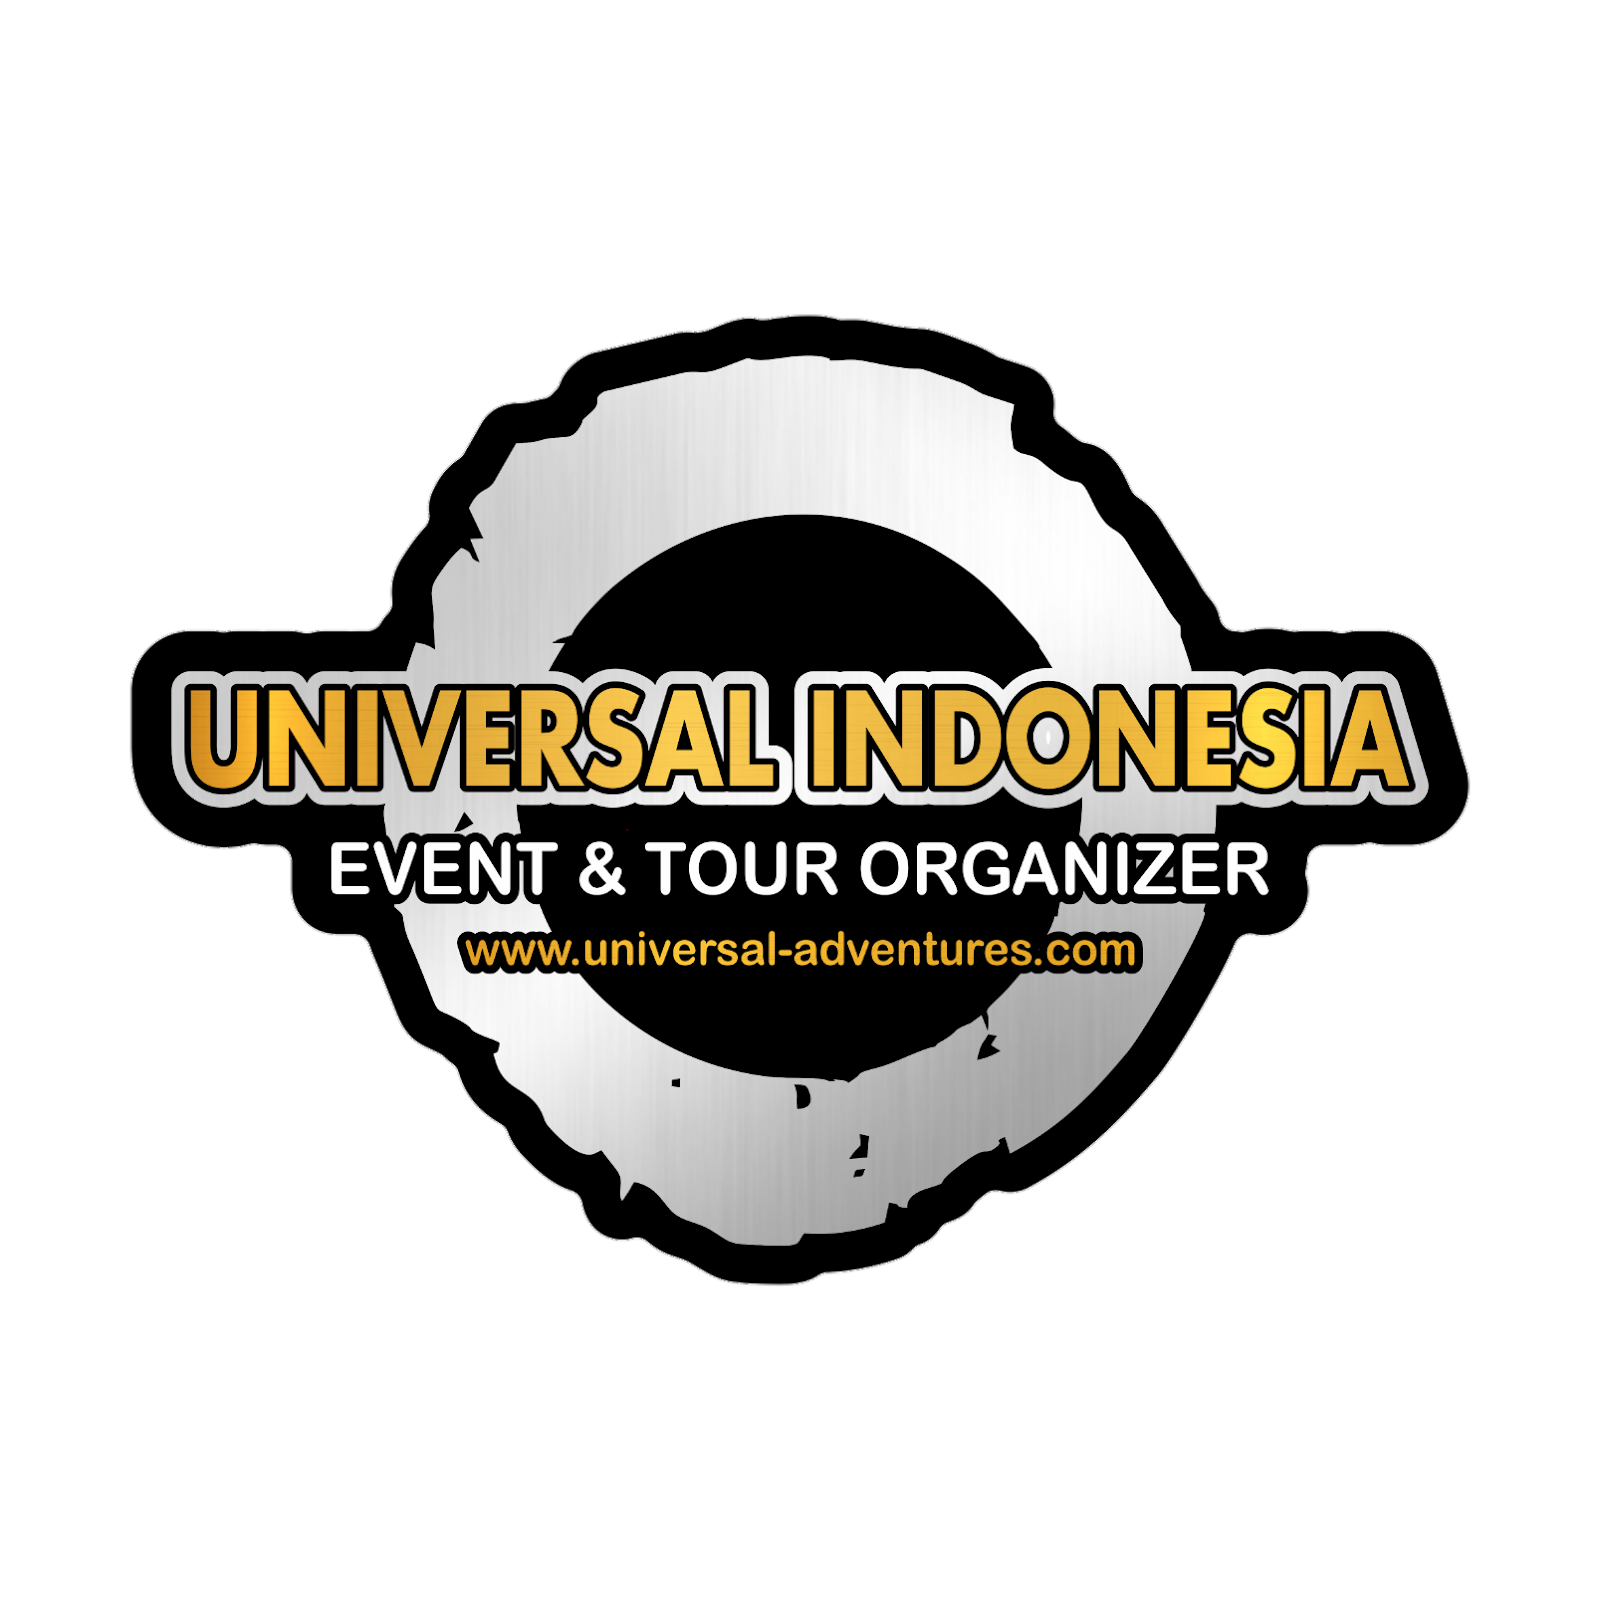 UNIVERSAL ADVENTURE INDONESIA